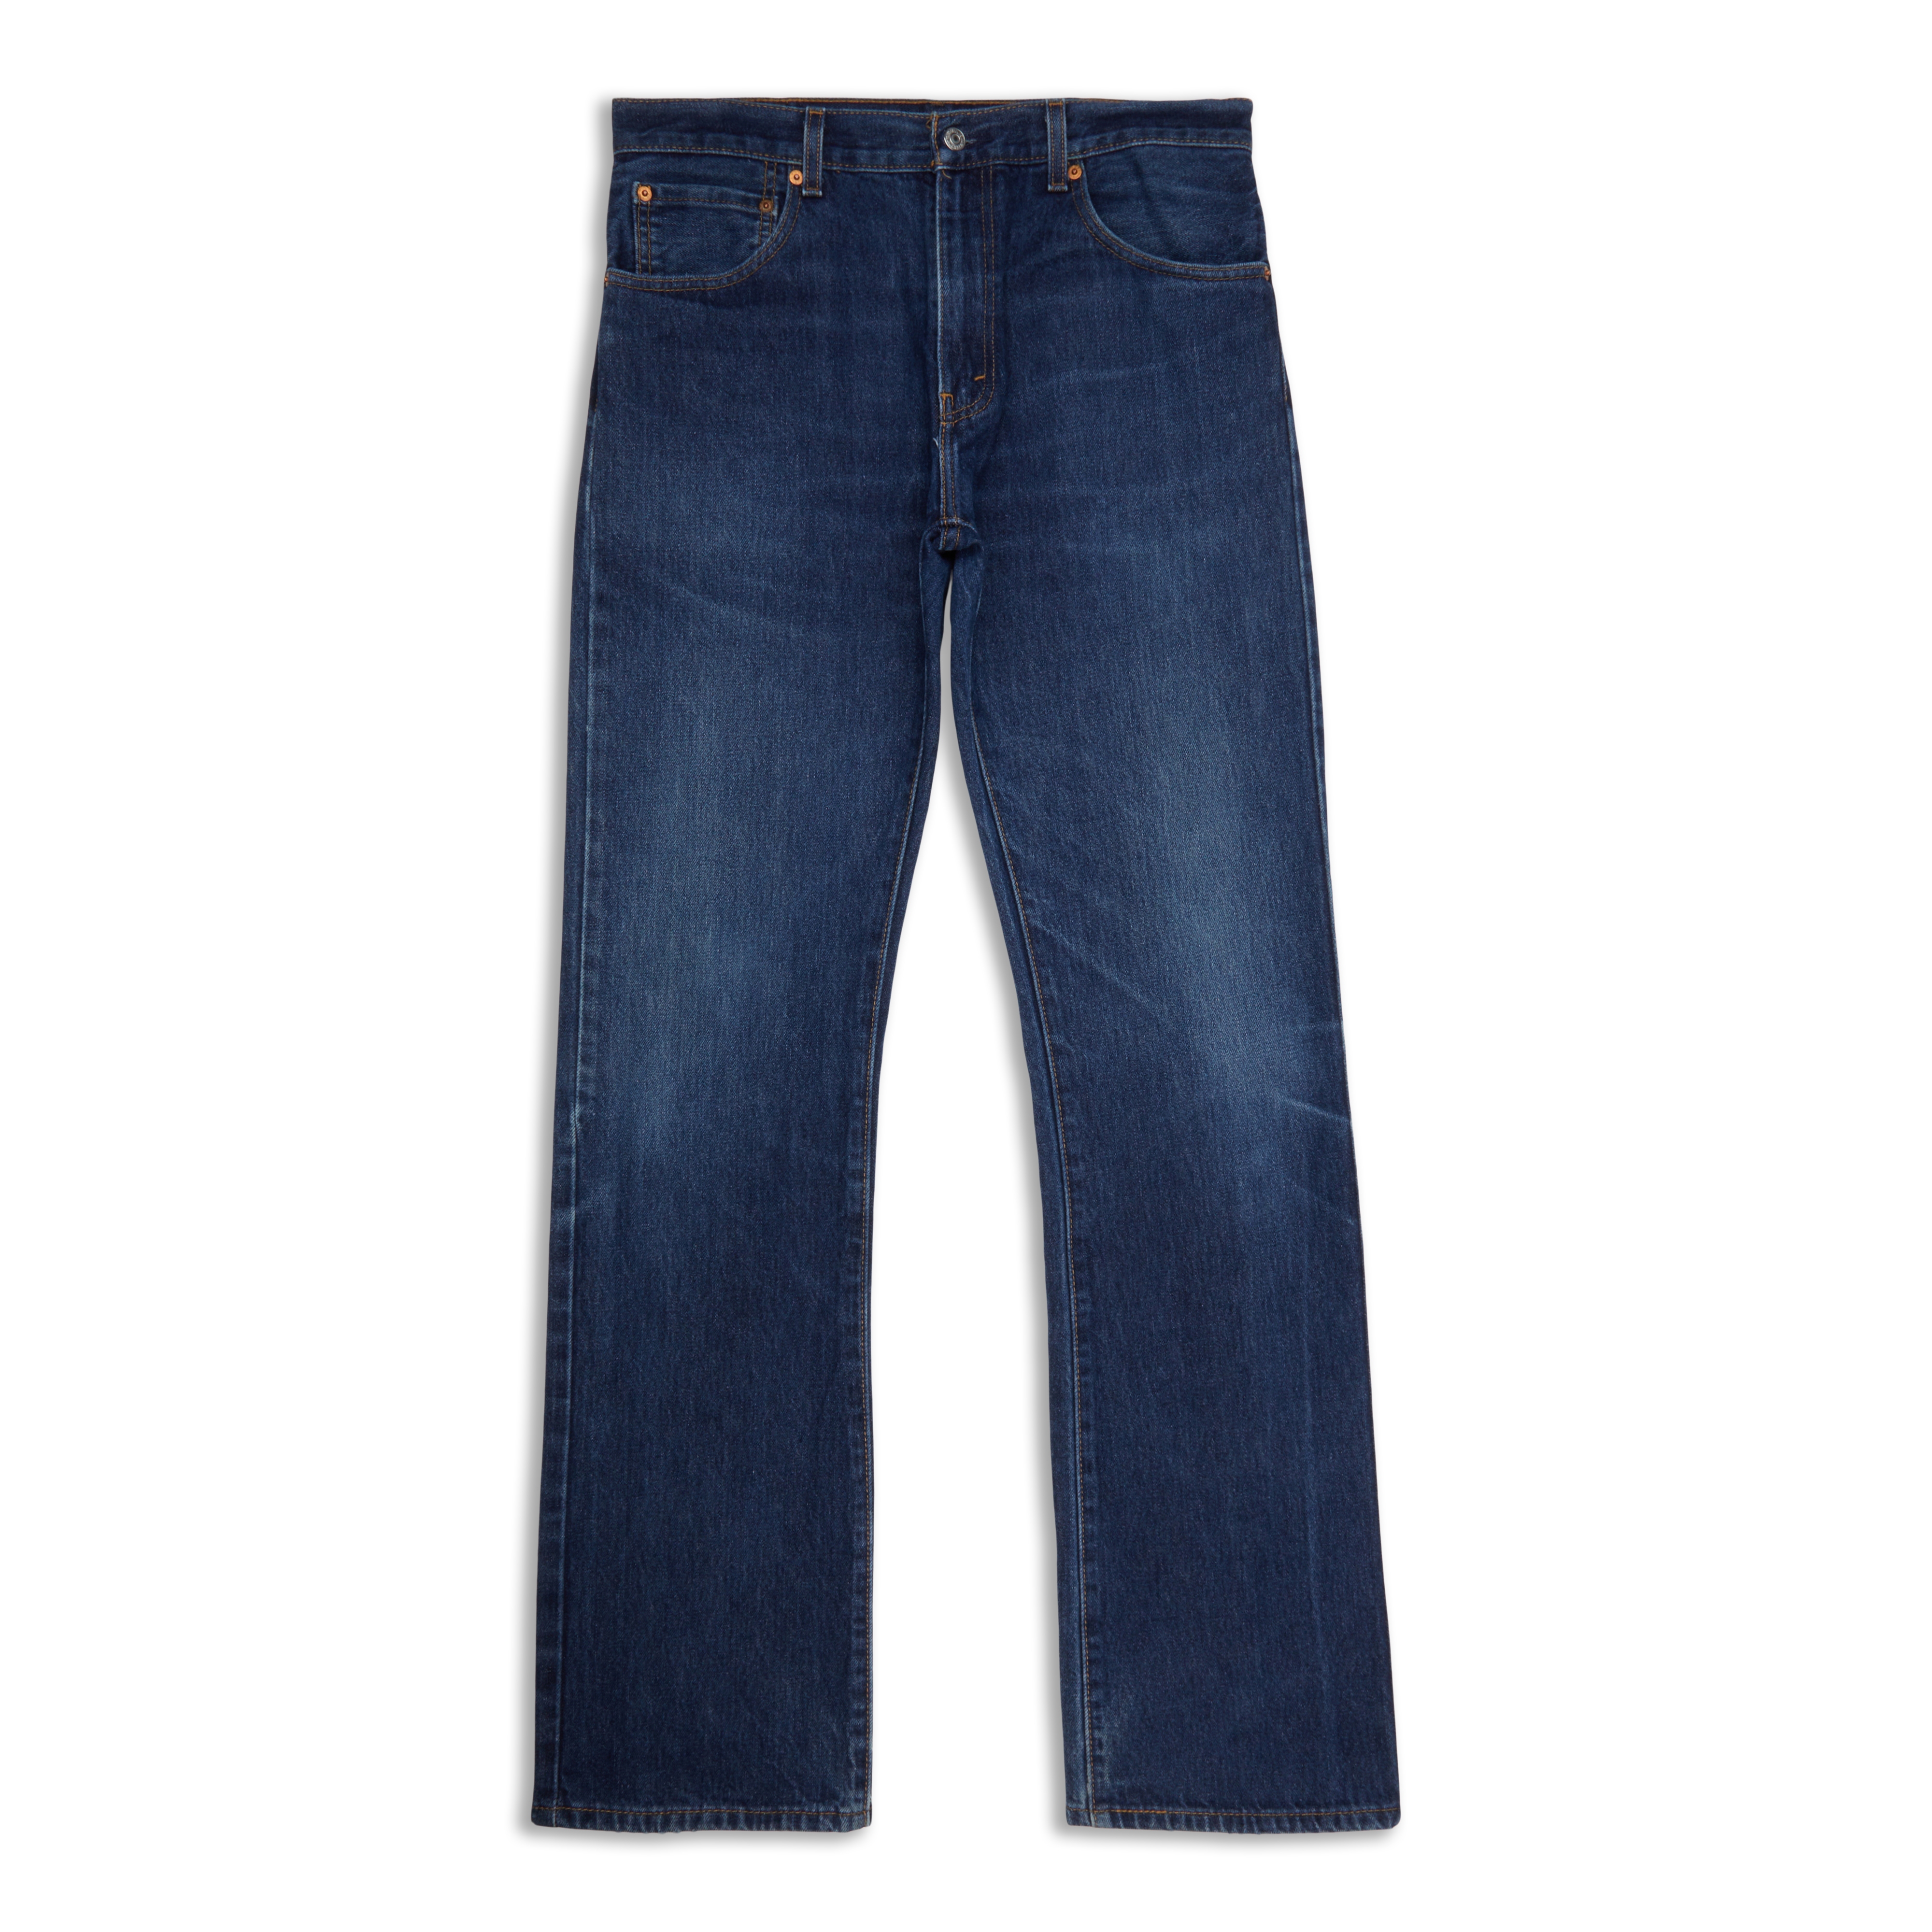 Levis 517™ Boot Cut Men's Jeans Rigid